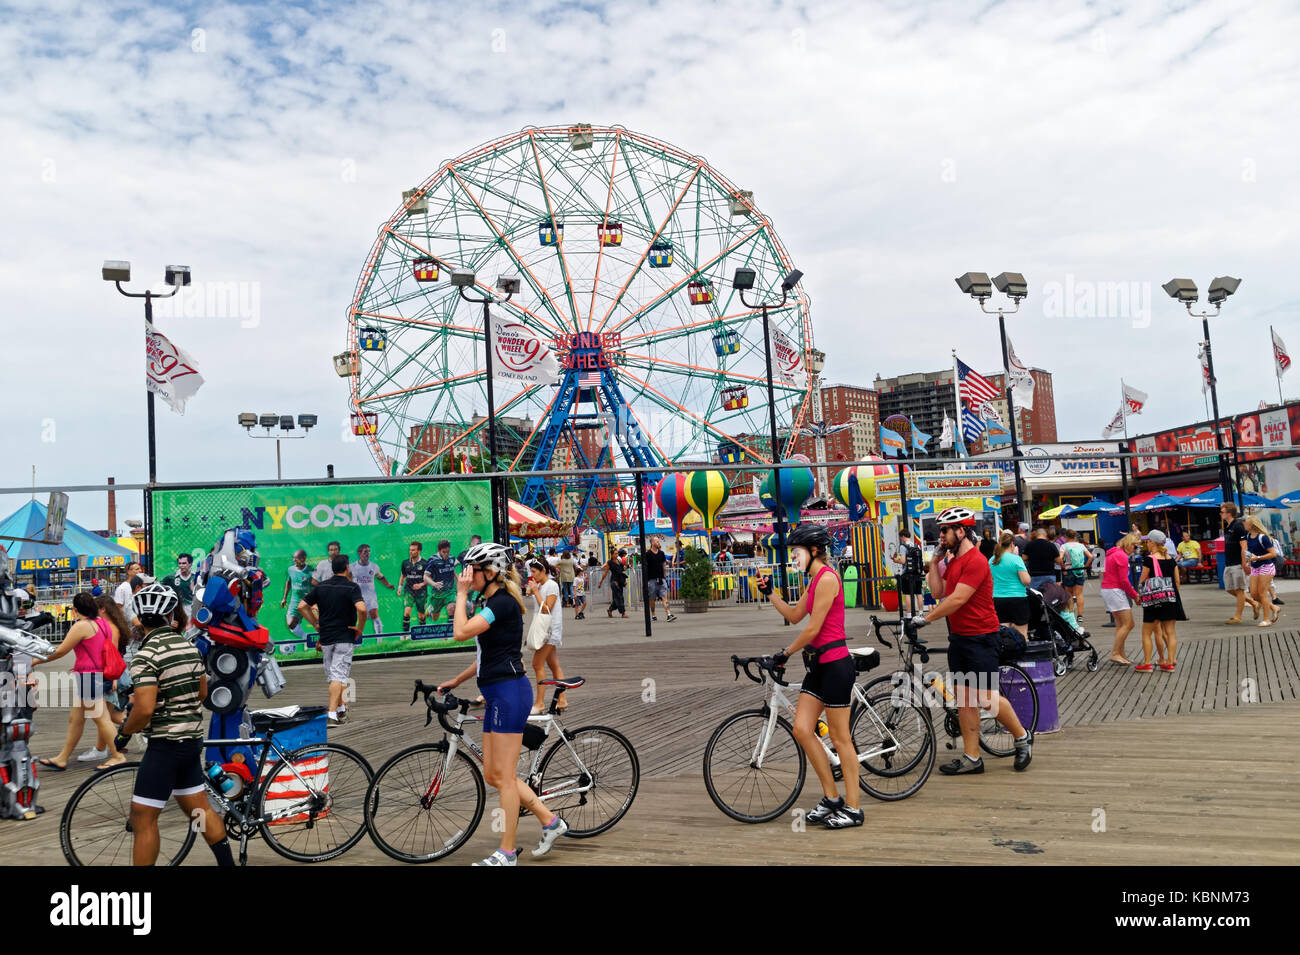 Boardwalk, amusement park featuring the famed Wonder Wheel in Coney Island. Stock Photo